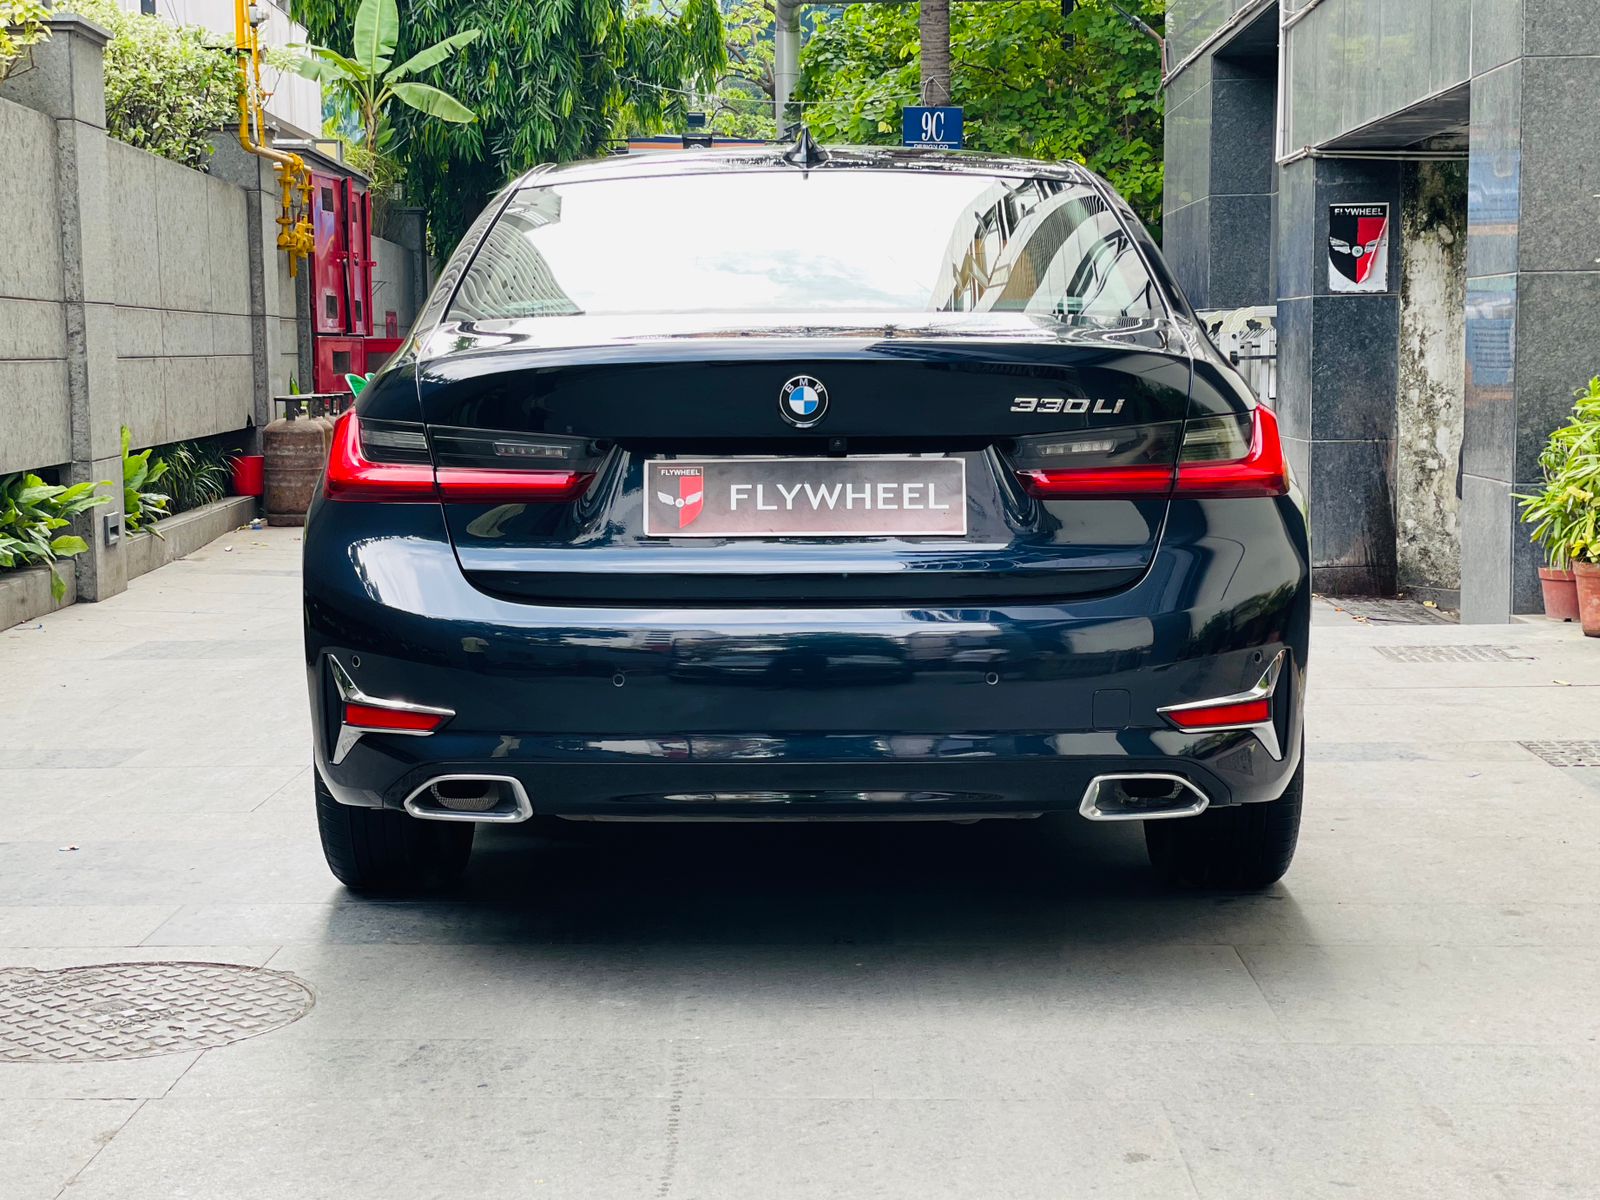 BMW 330LI